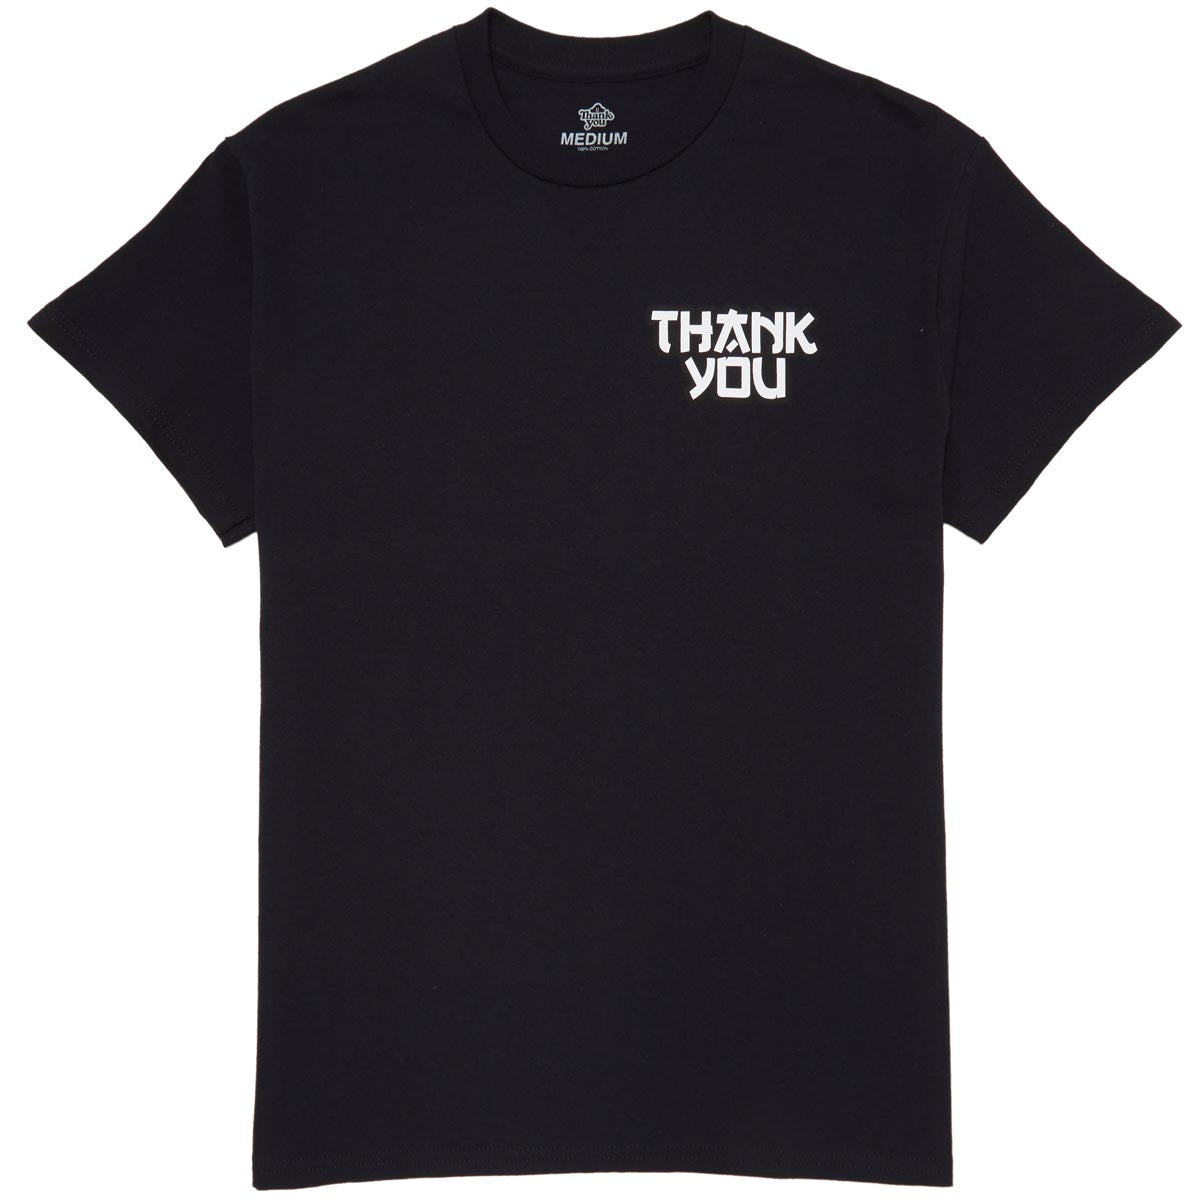 Thank You Good Luck T-Shirt - Black image 1